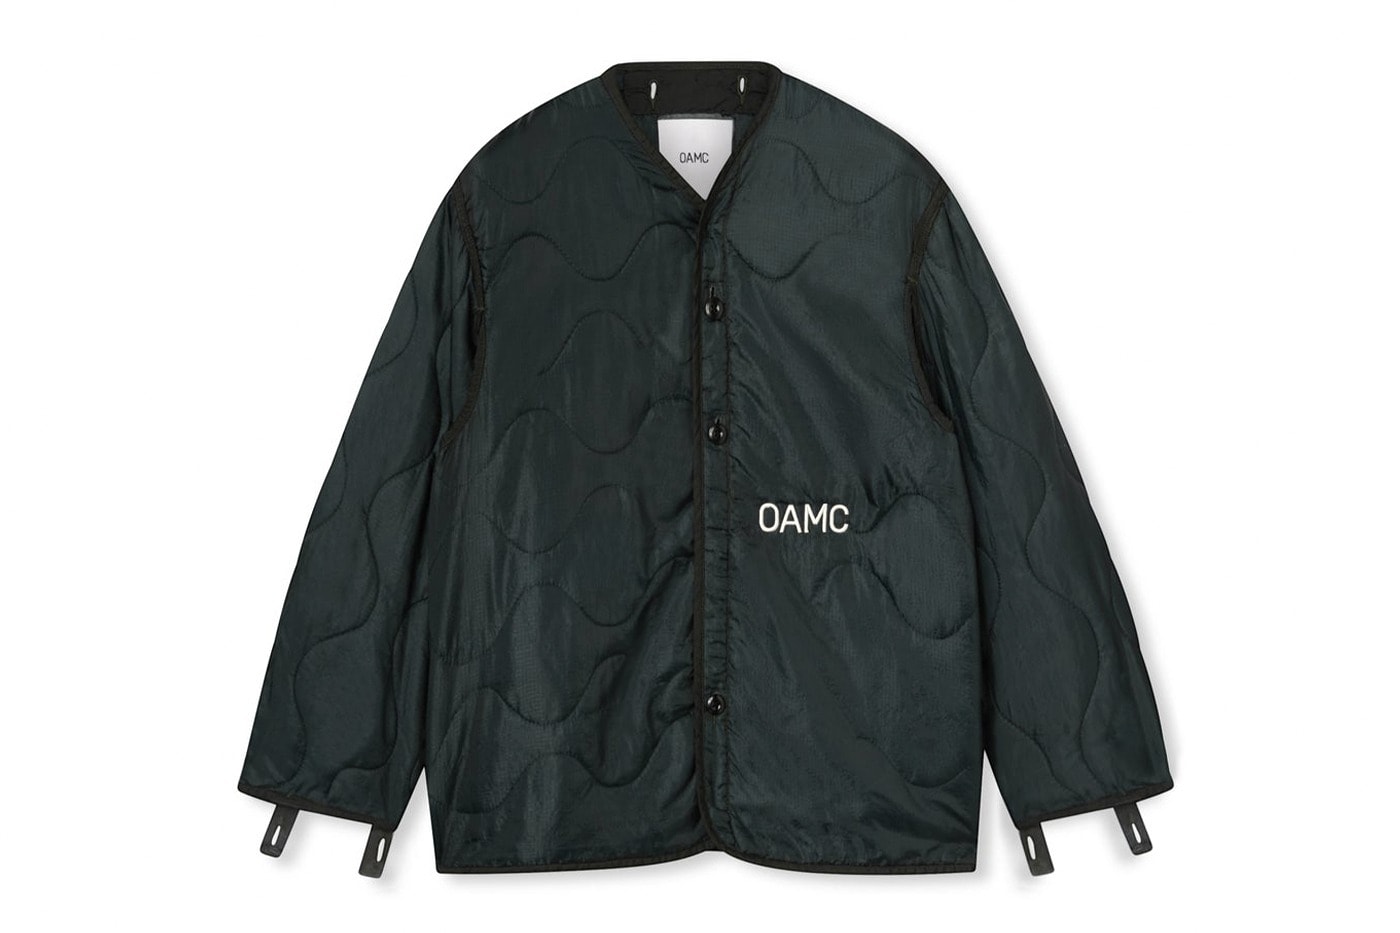 OAMC 人氣單品 Peacemaker Liner Jacket 全新配色正式登場